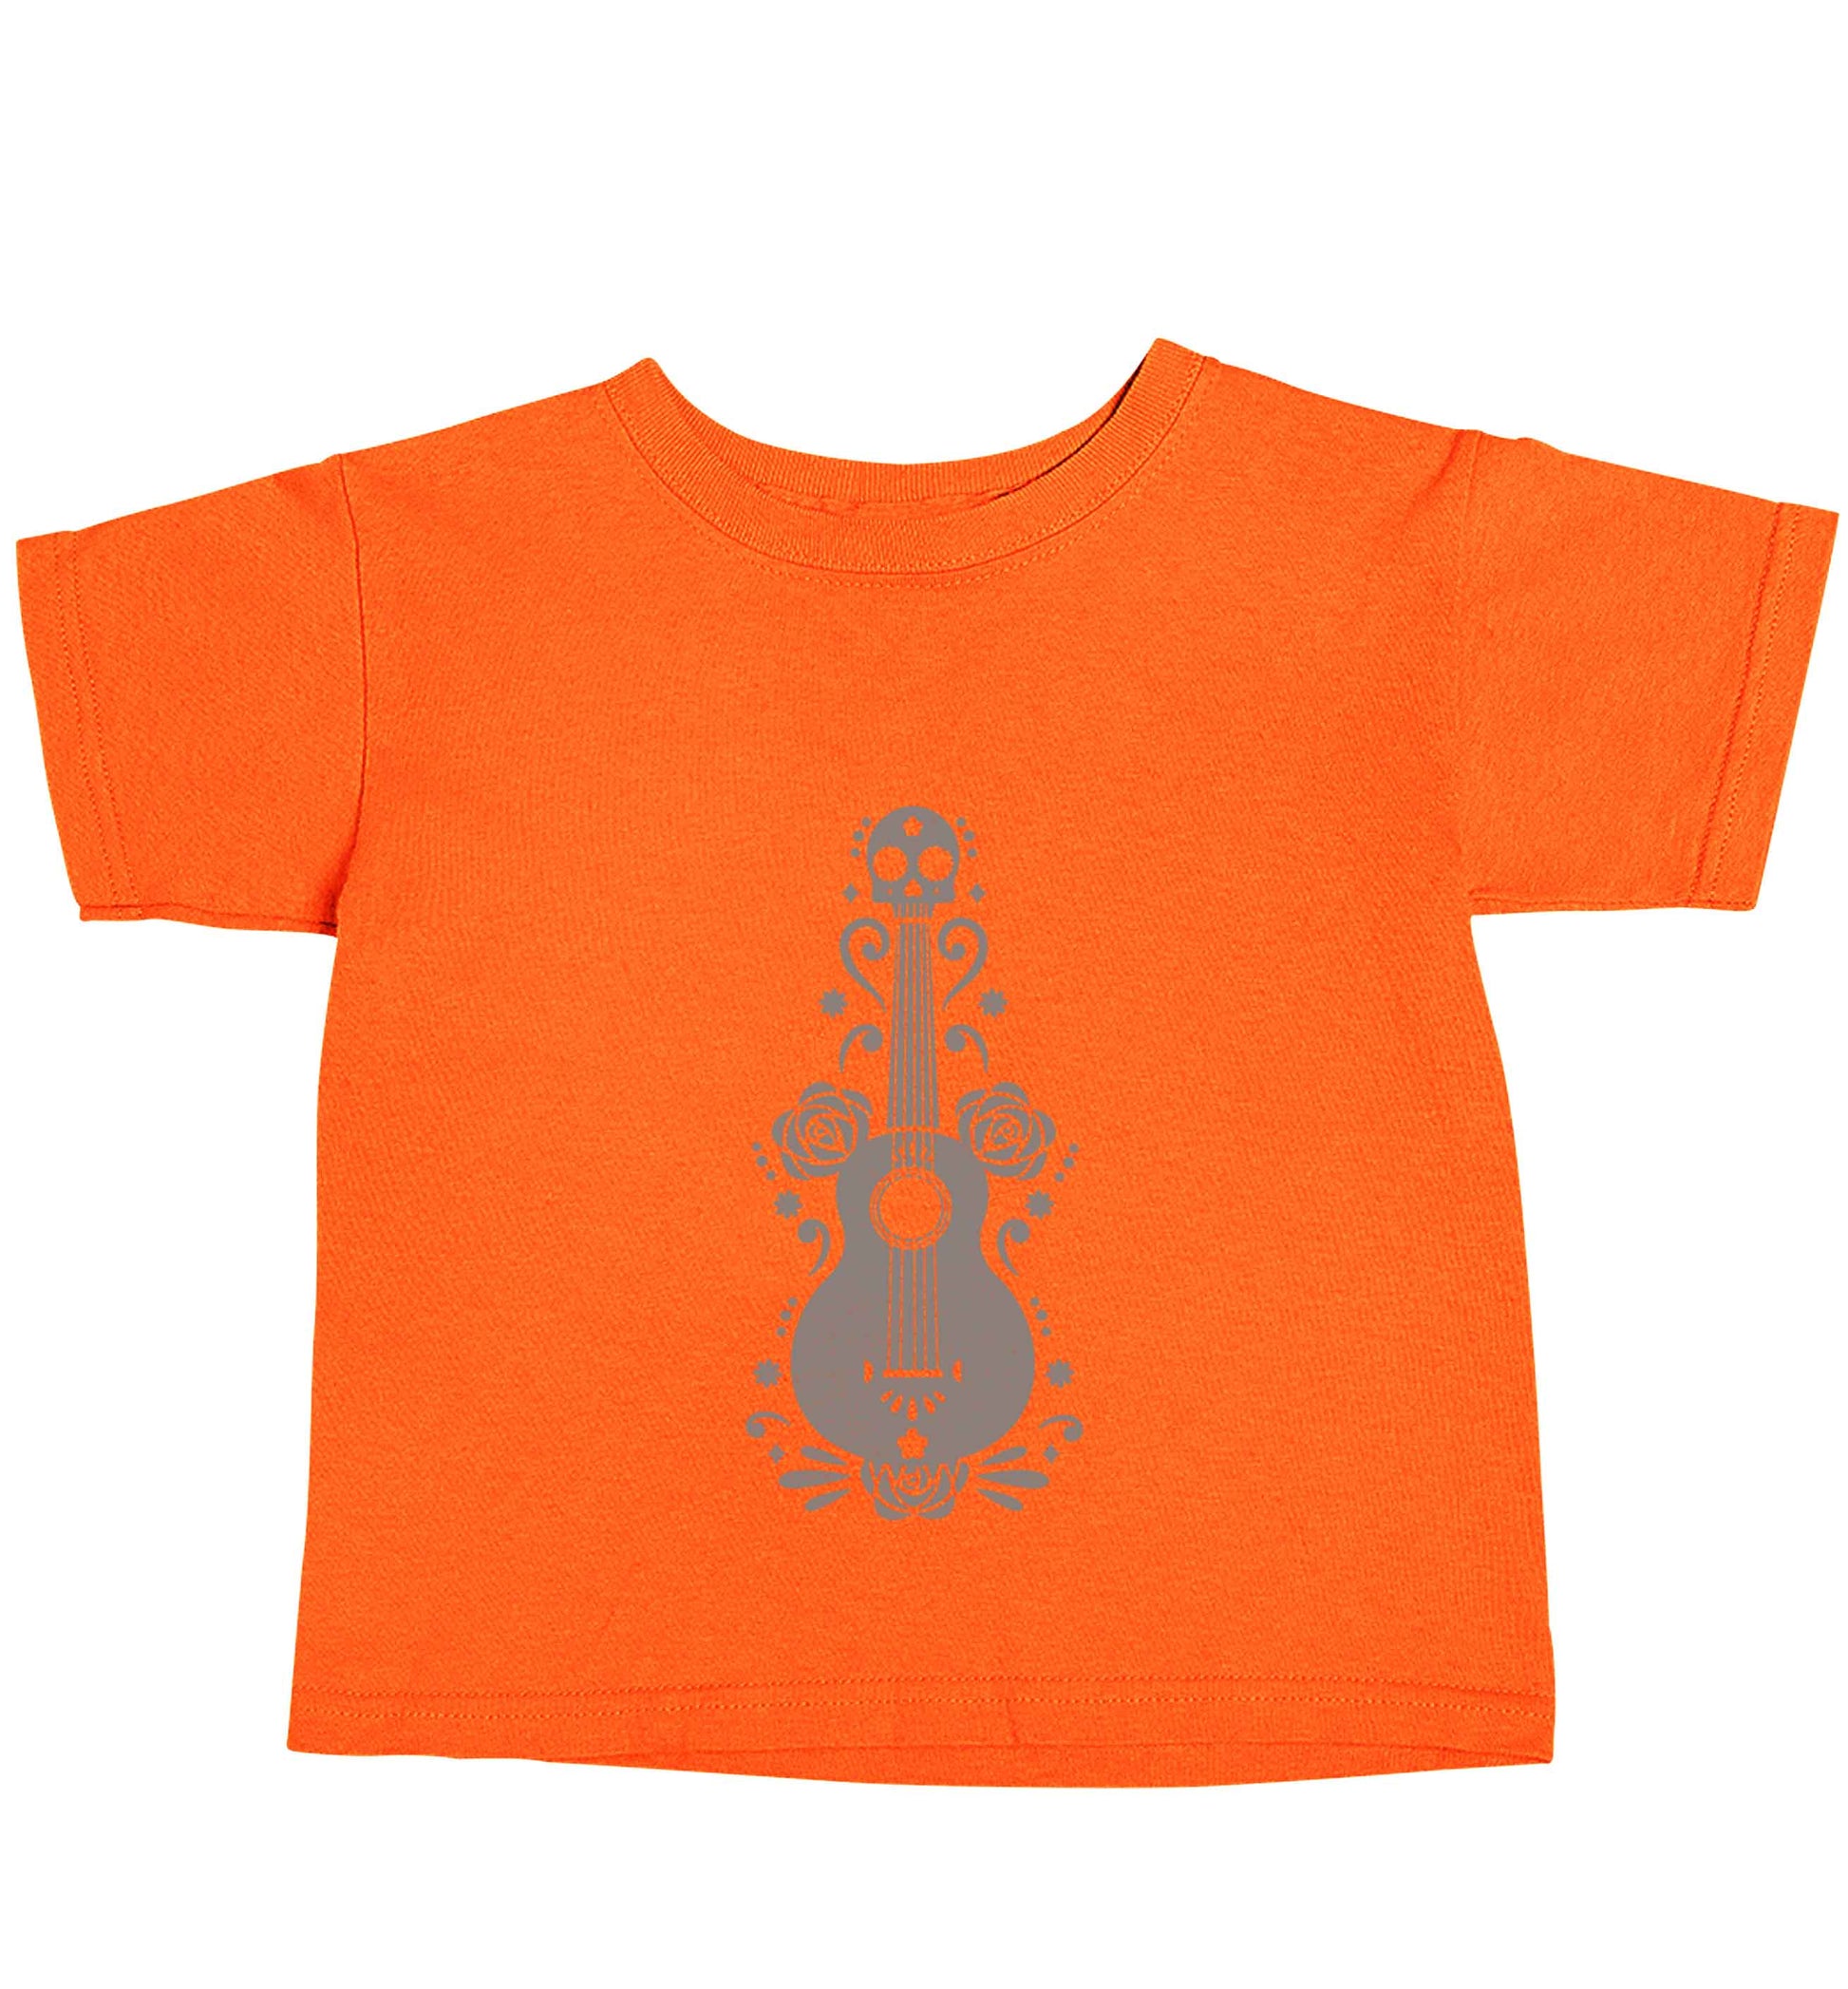 Guitar skull illustration orange baby toddler Tshirt 2 Years